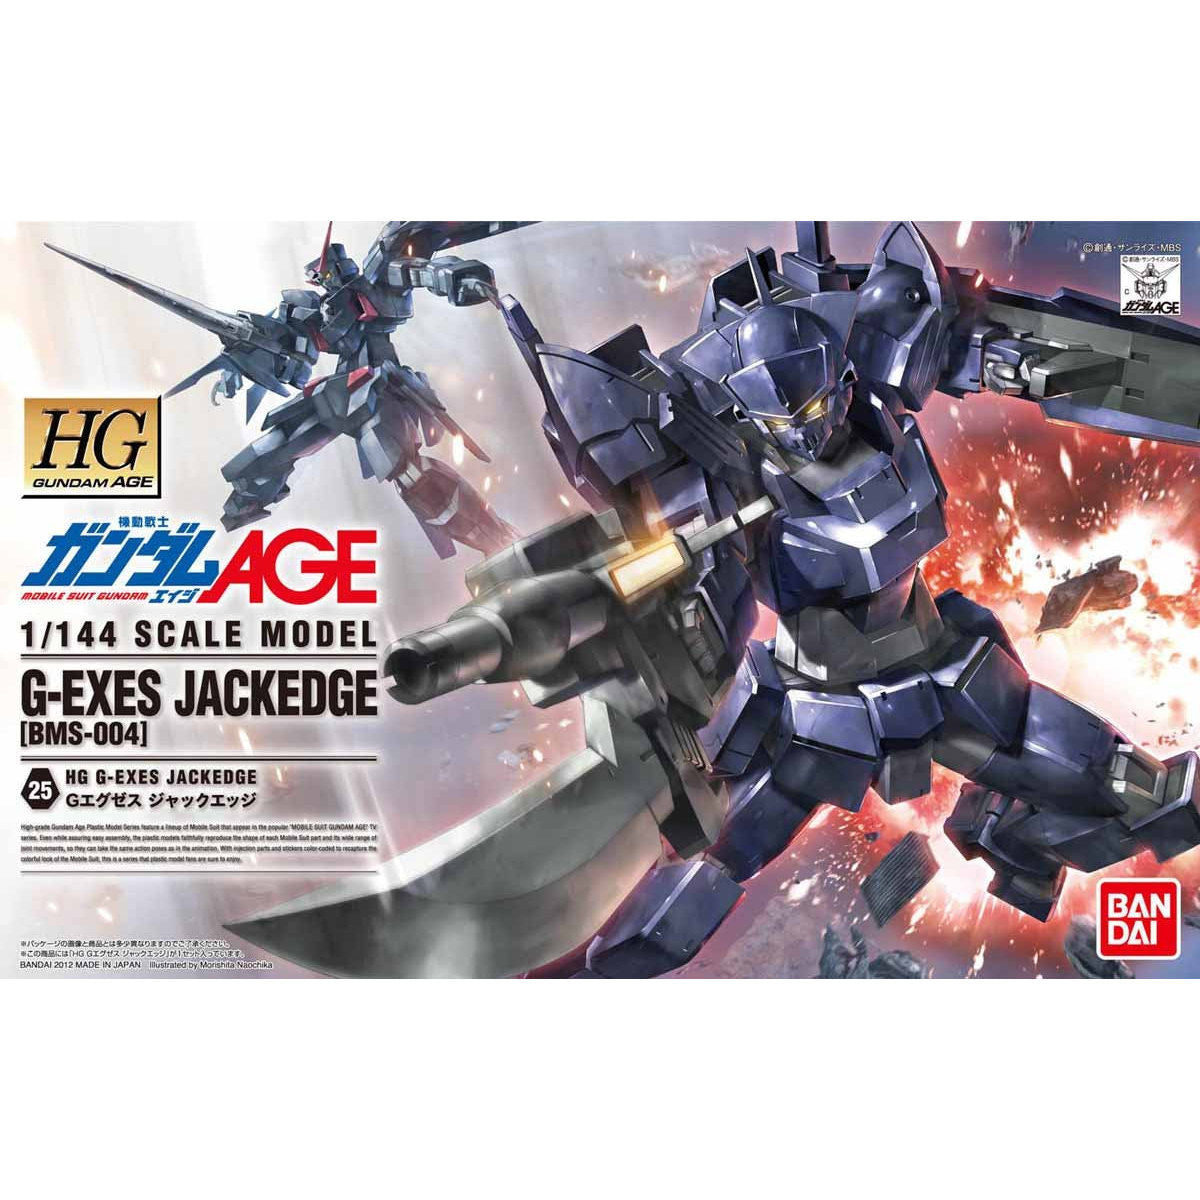 HG G-EXES JACKEDGE [BMS-004] 1/144